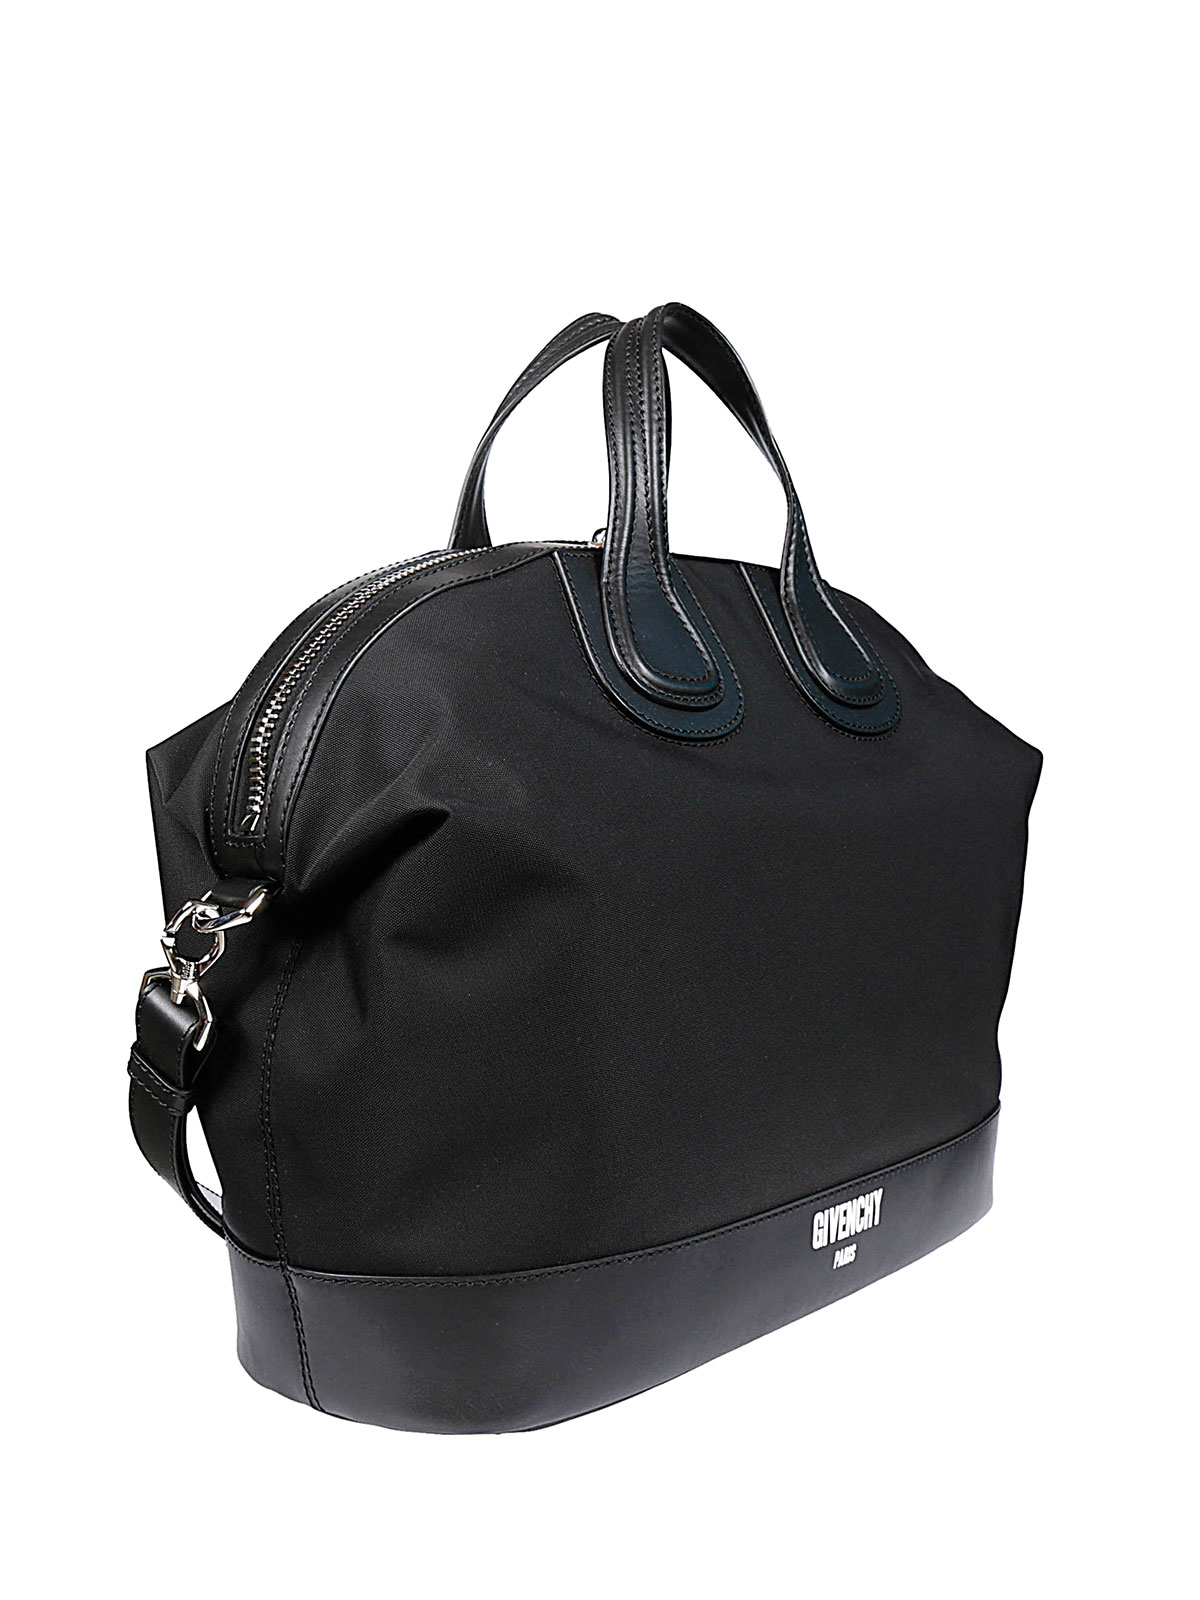 Givenchy - NIGHTINGALE DUFFLE BAG 